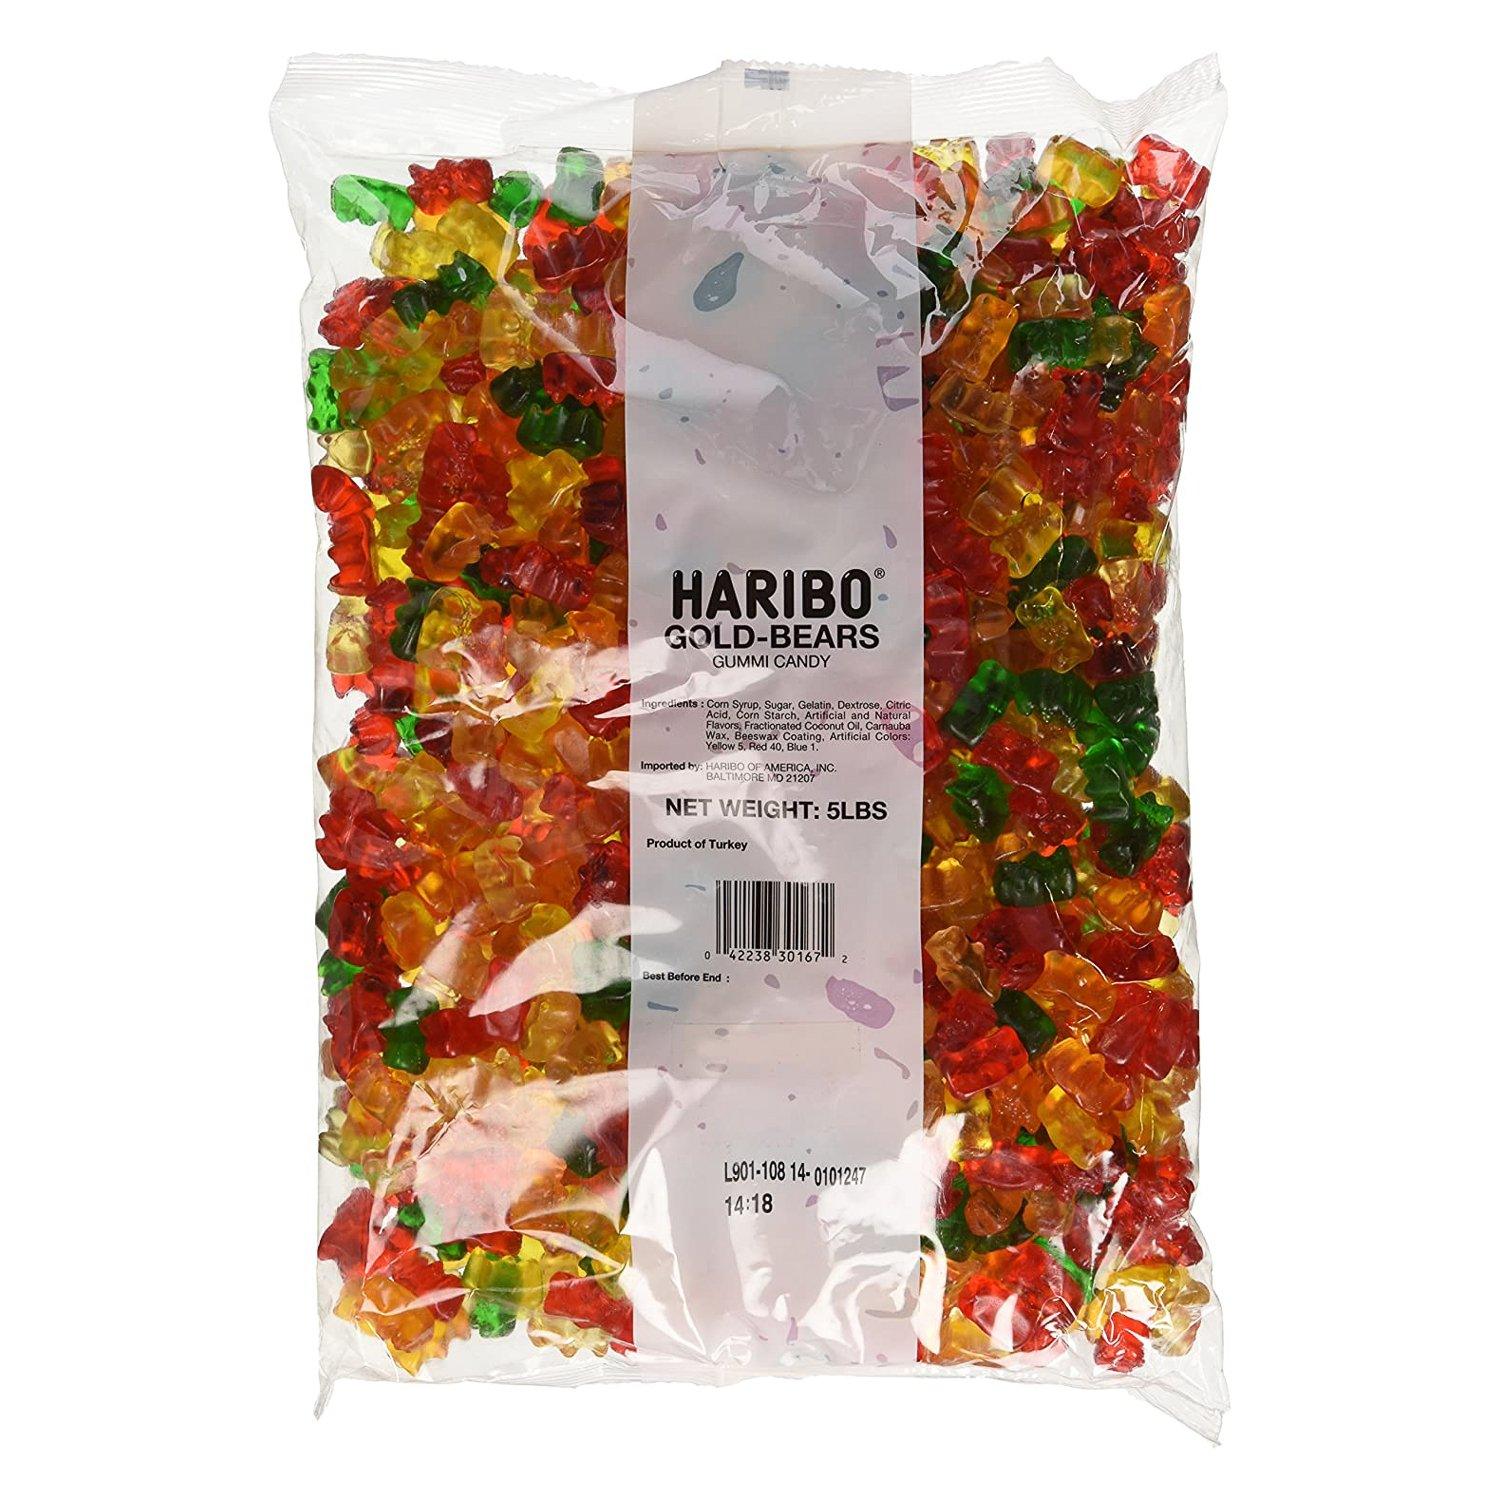 Haribo Gummi Candies Meltable Haribo Goldbears 5 Pound 